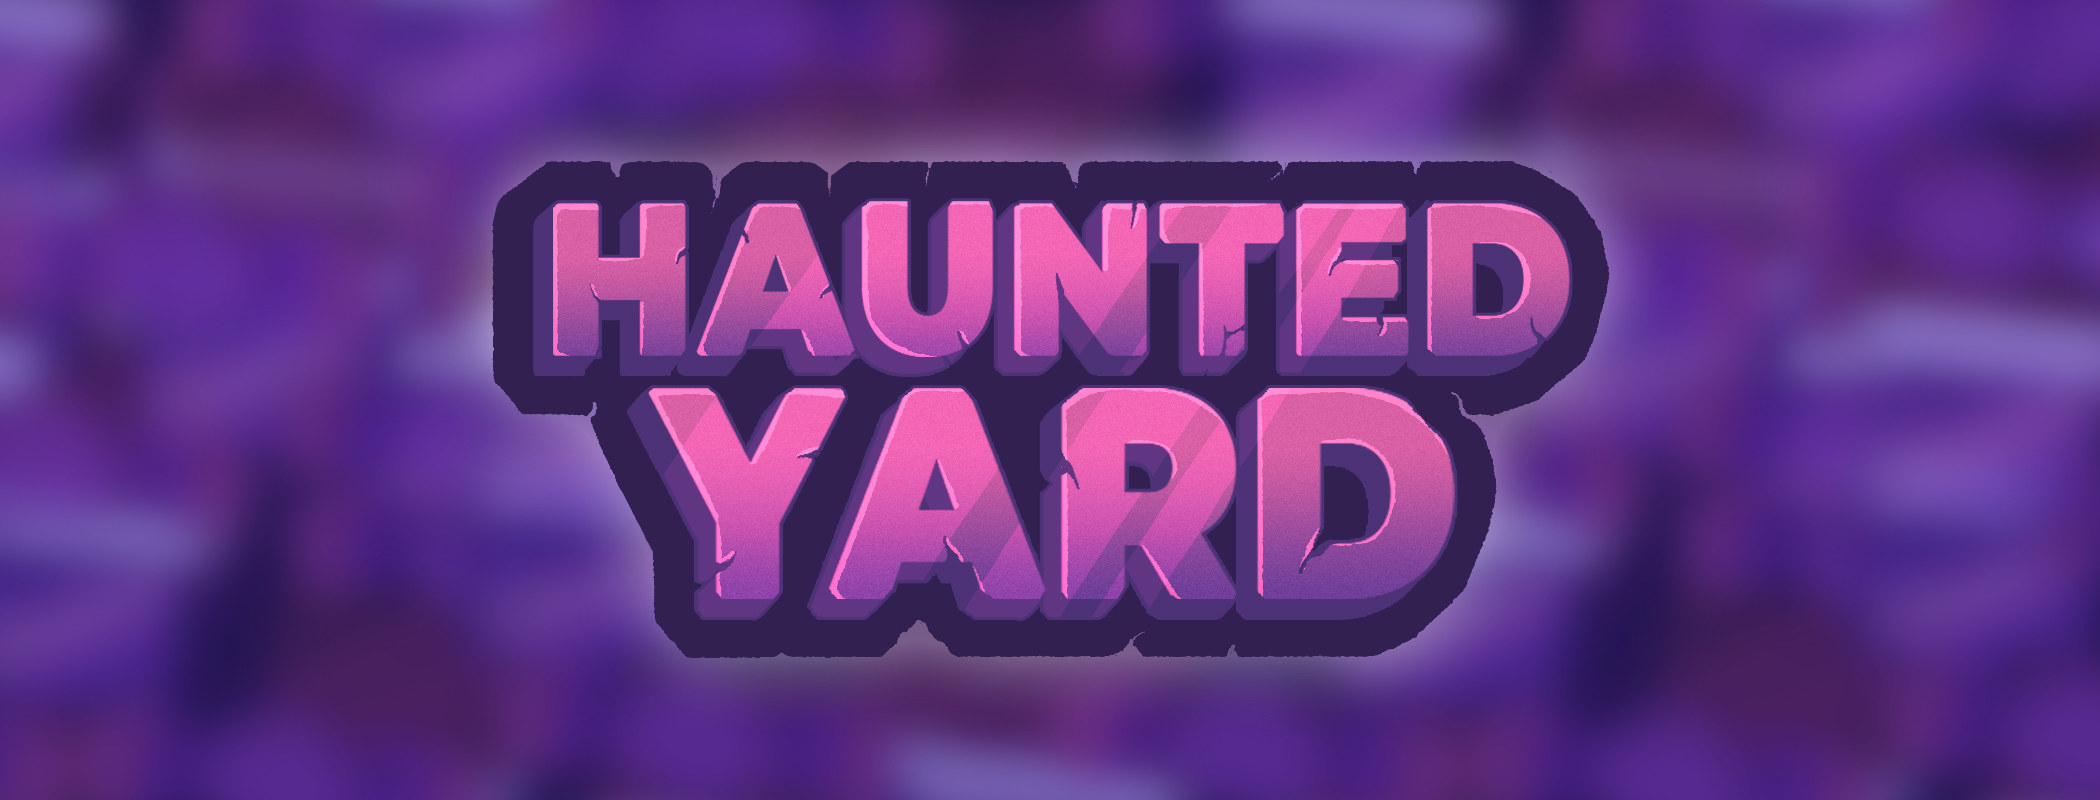 Haunted Yard